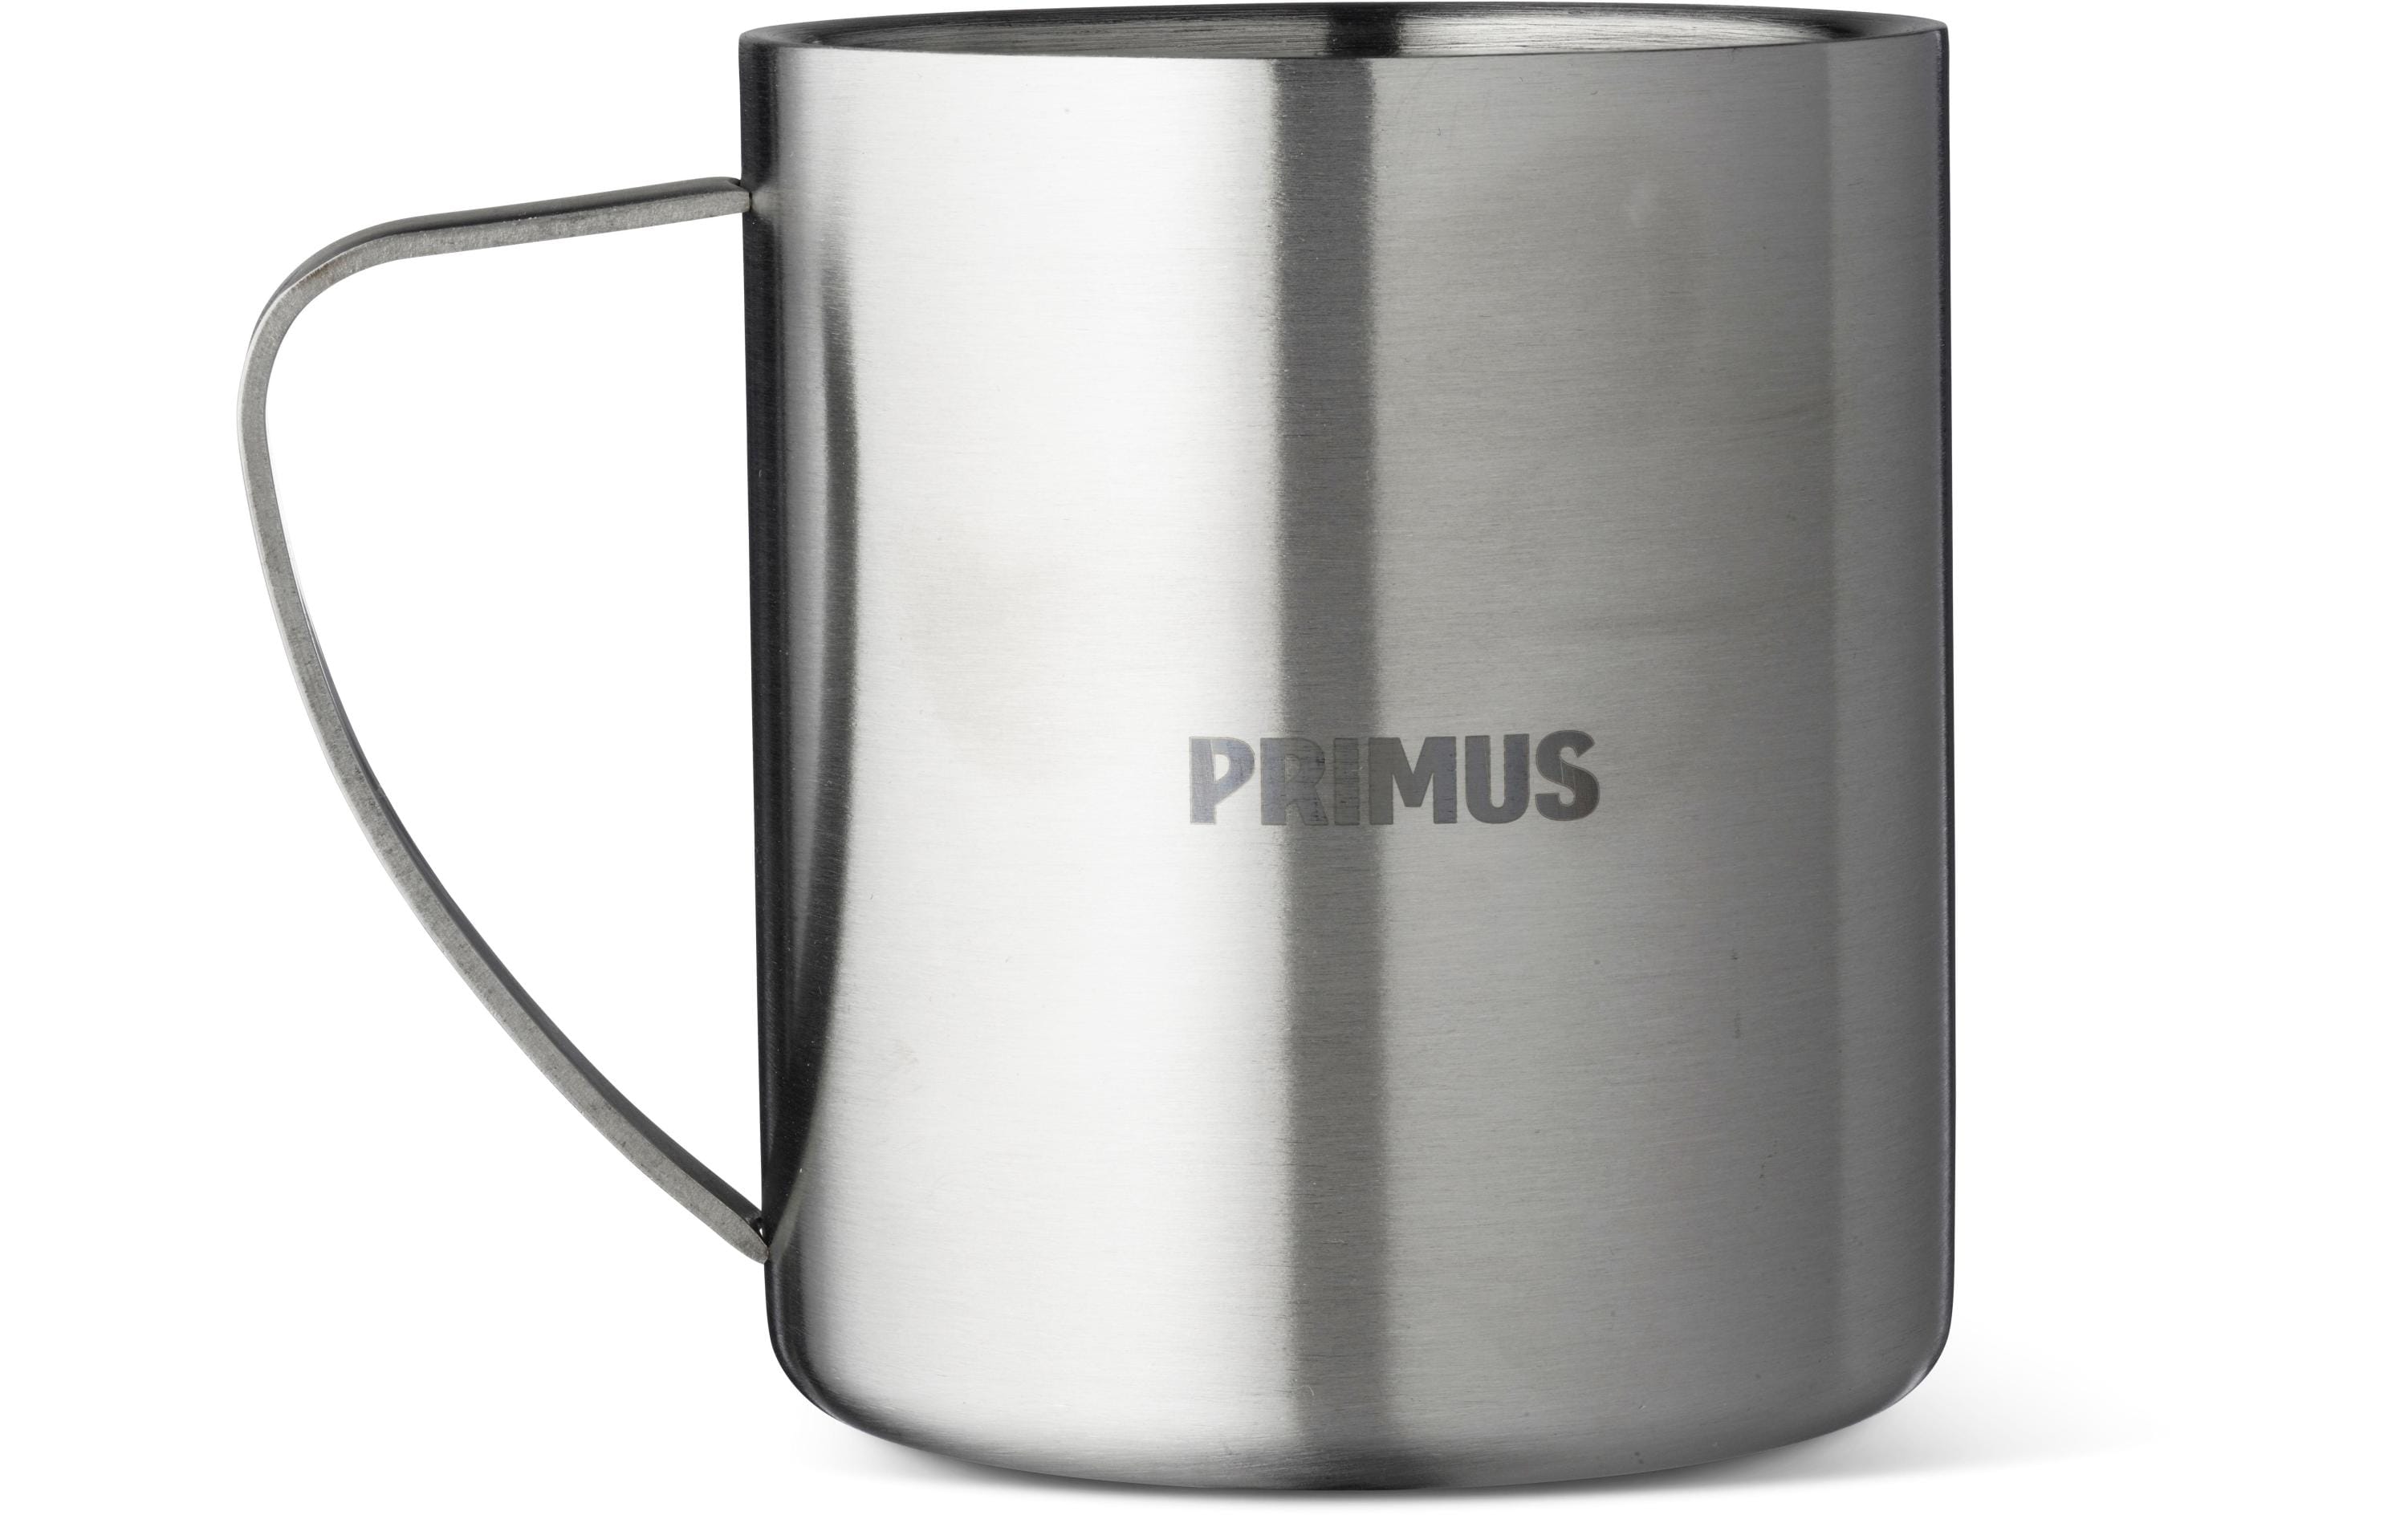 Primus Outdoor-Becher 4-Season Mug 0,3 l